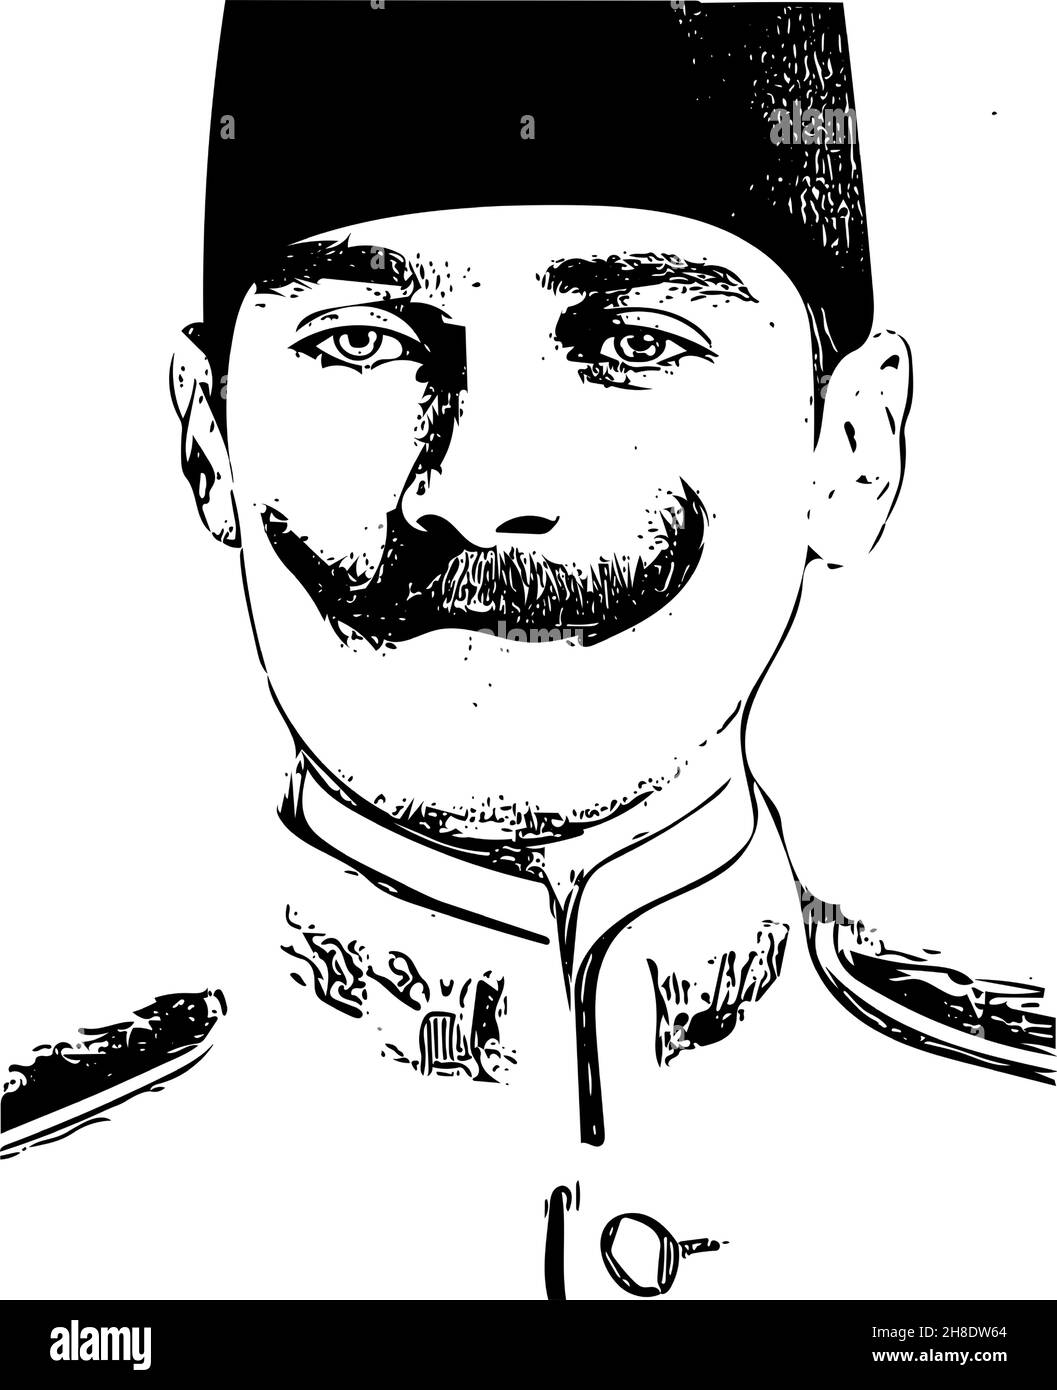 Mustafa Kemal Ataturk vector illustration. He is the founder of modern Republic of Turkey. Stock Vector